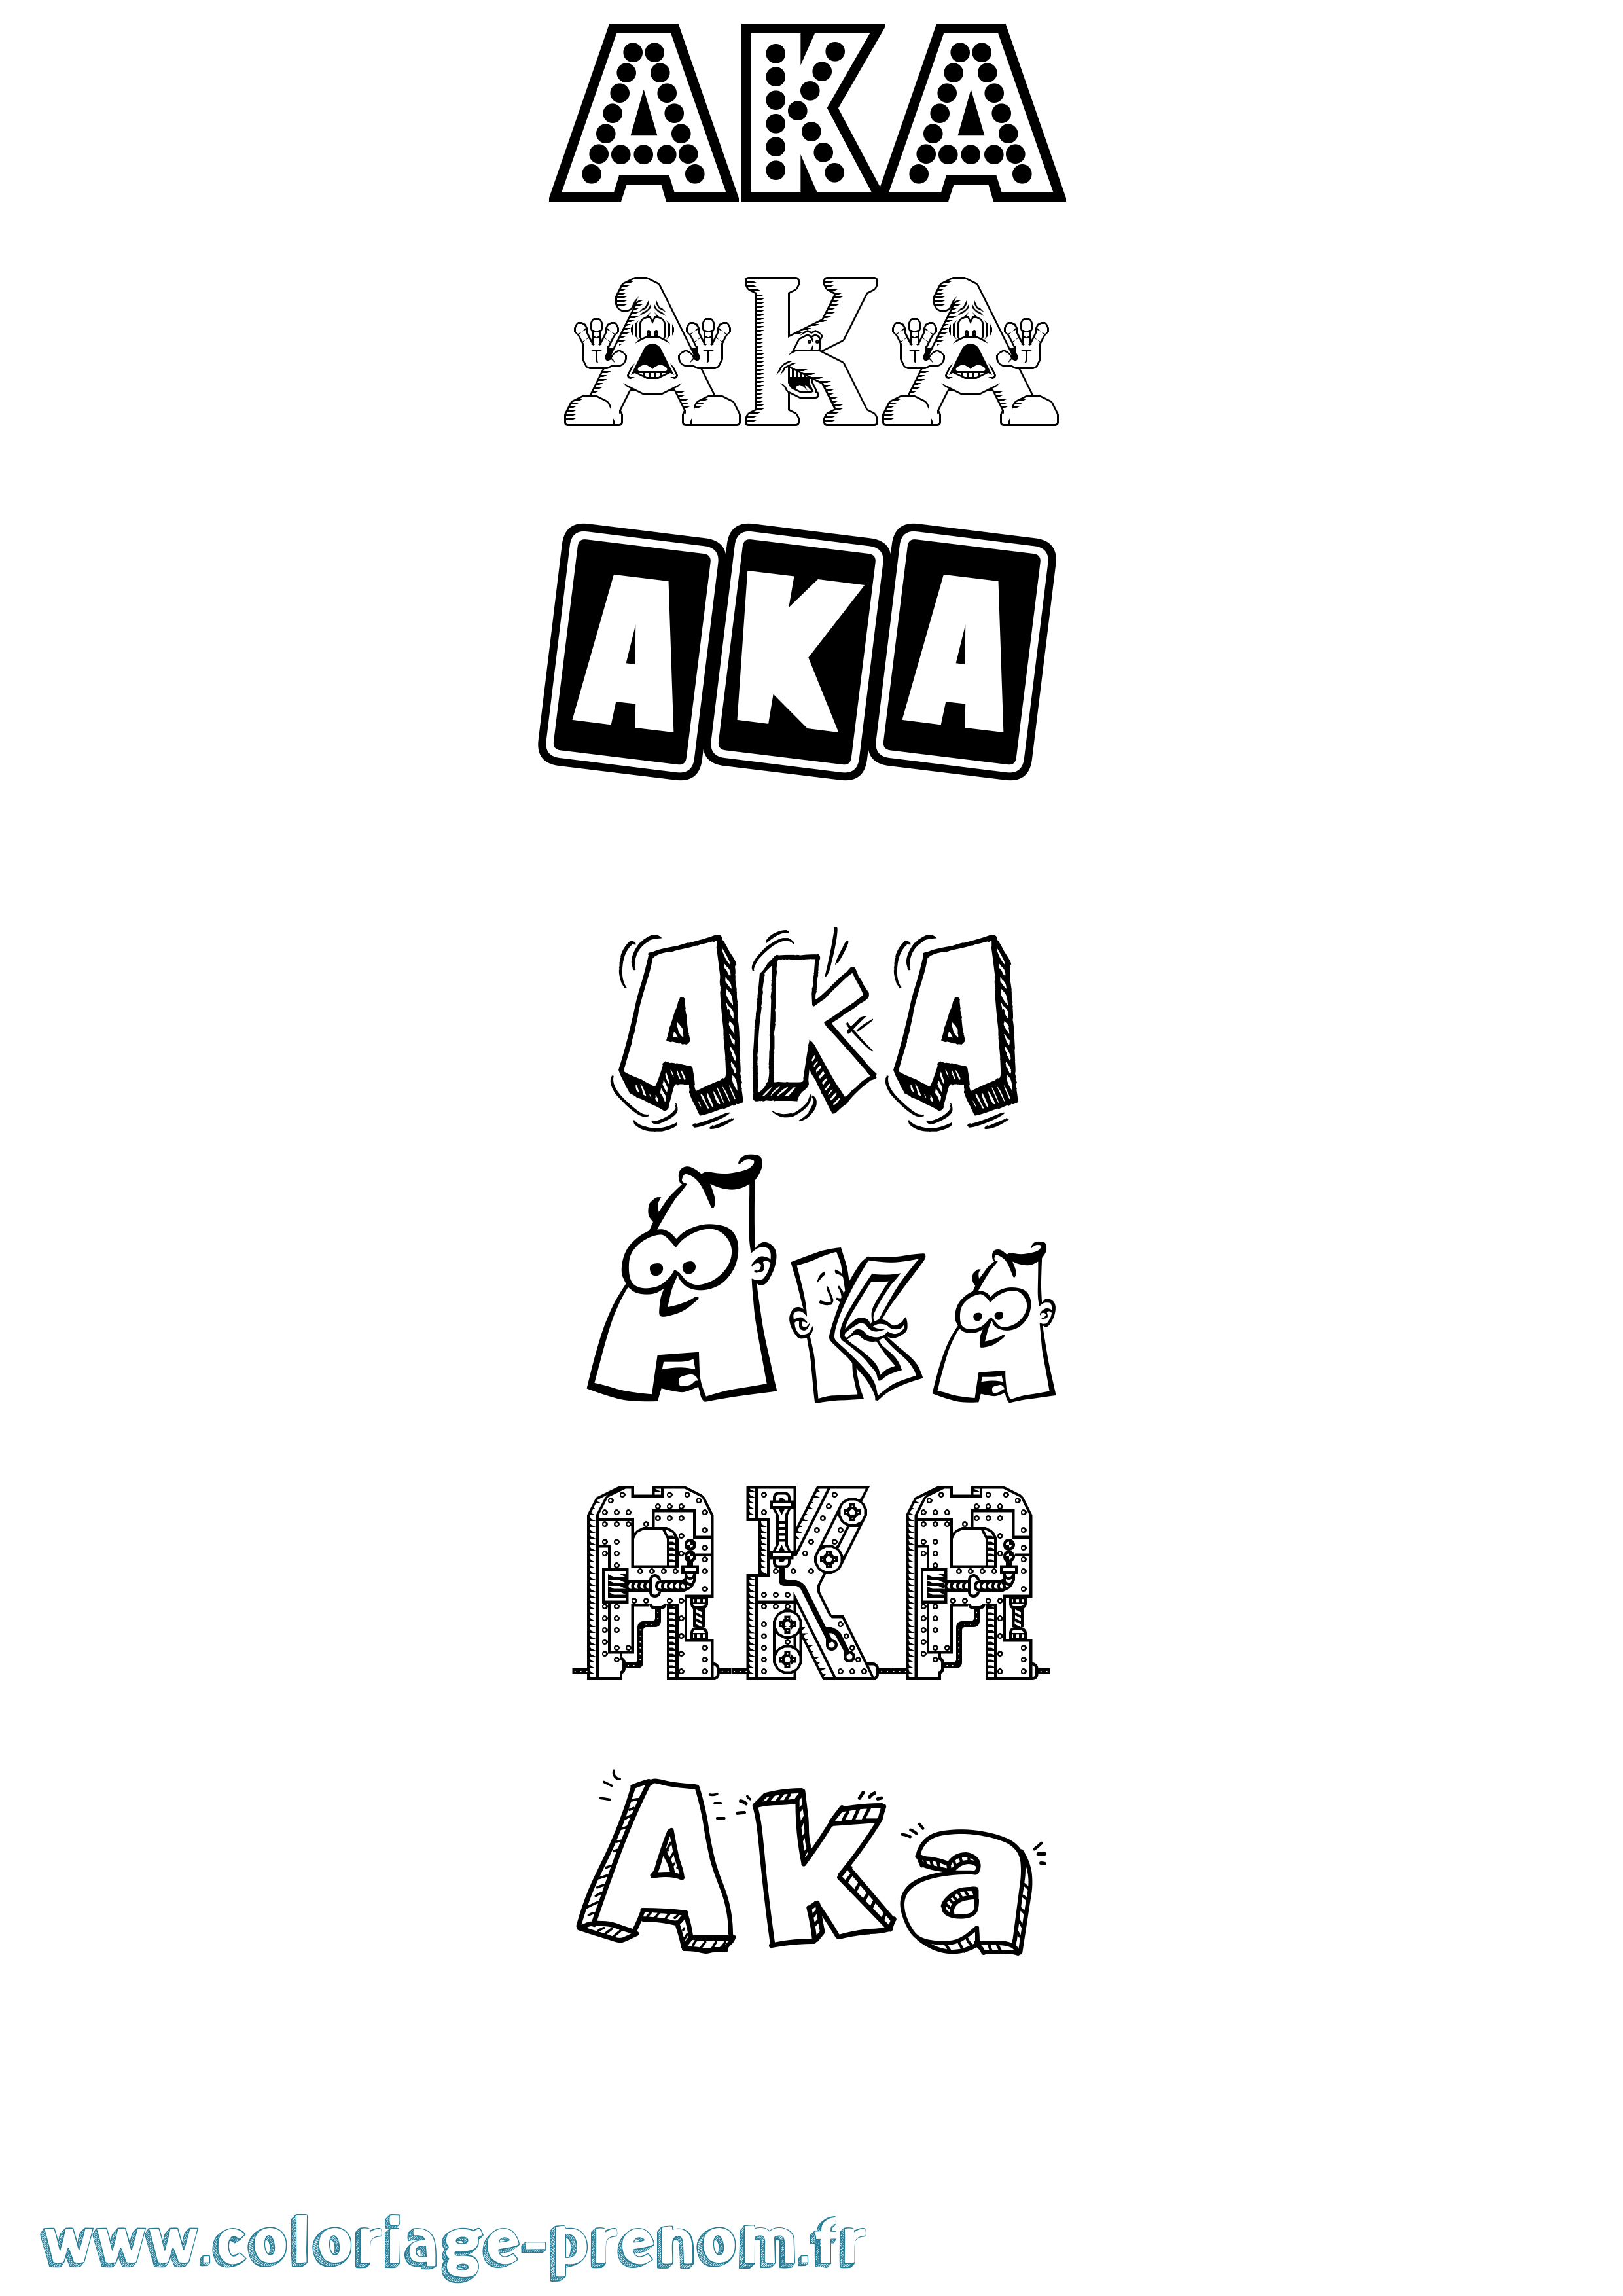 Coloriage prénom Aka Fun